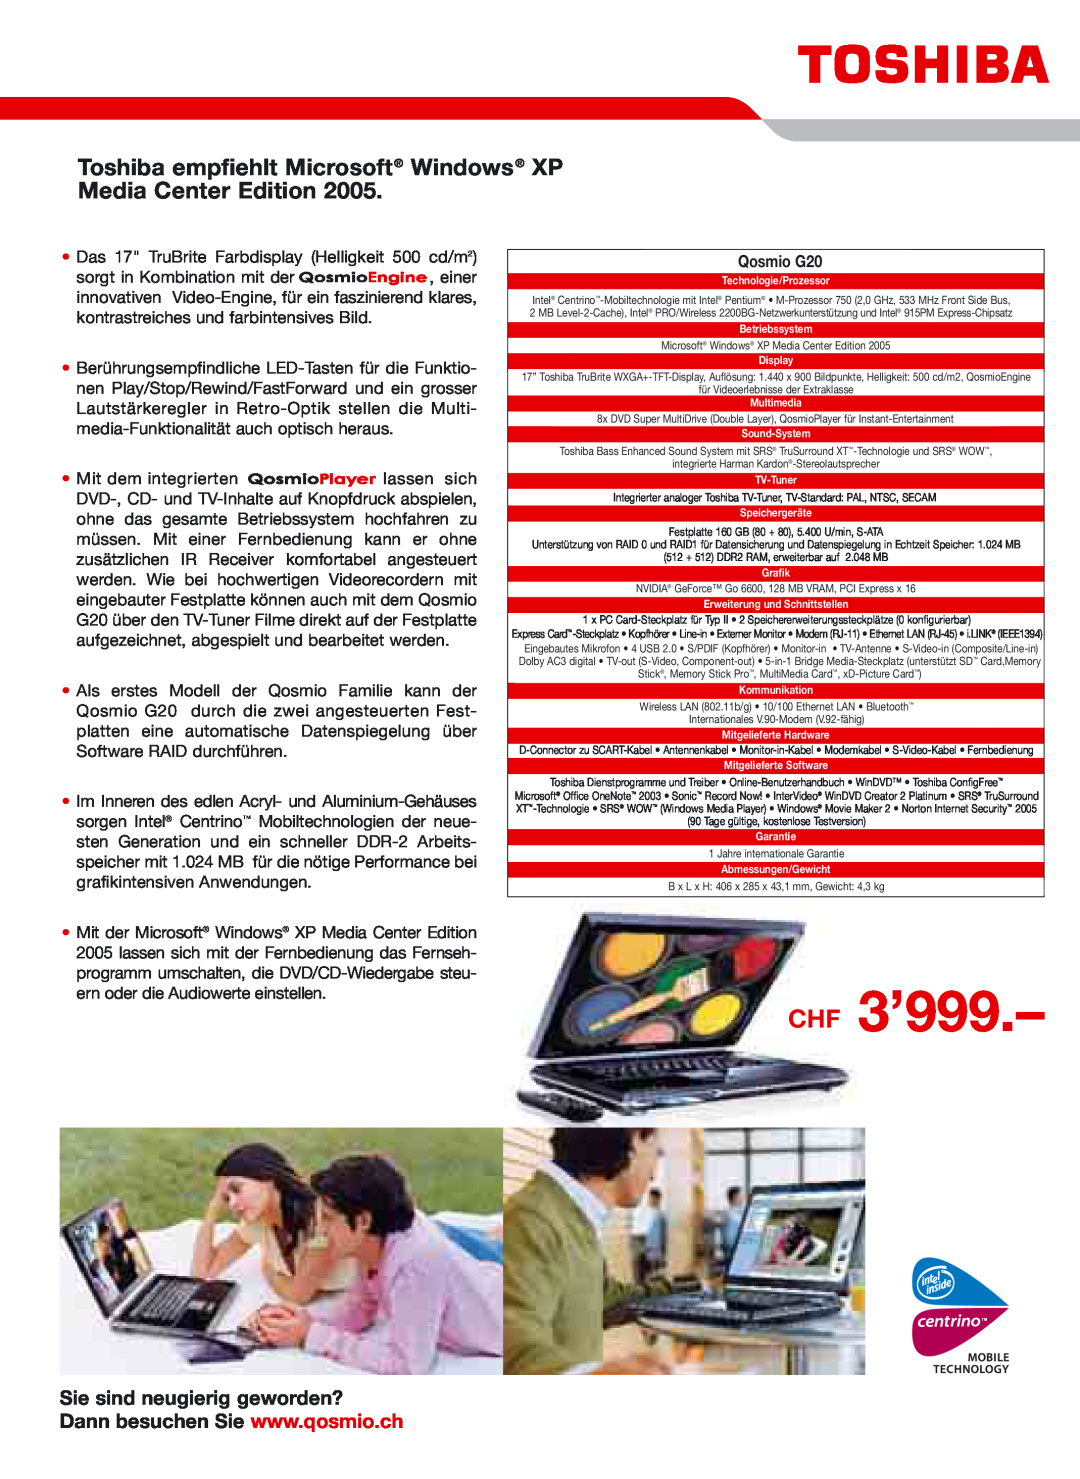 Toshiba Portg R200 manual Qosmio G20, CHF 3’999, Toshiba empfiehlt Microsoft Windows XP Media Center Edition 